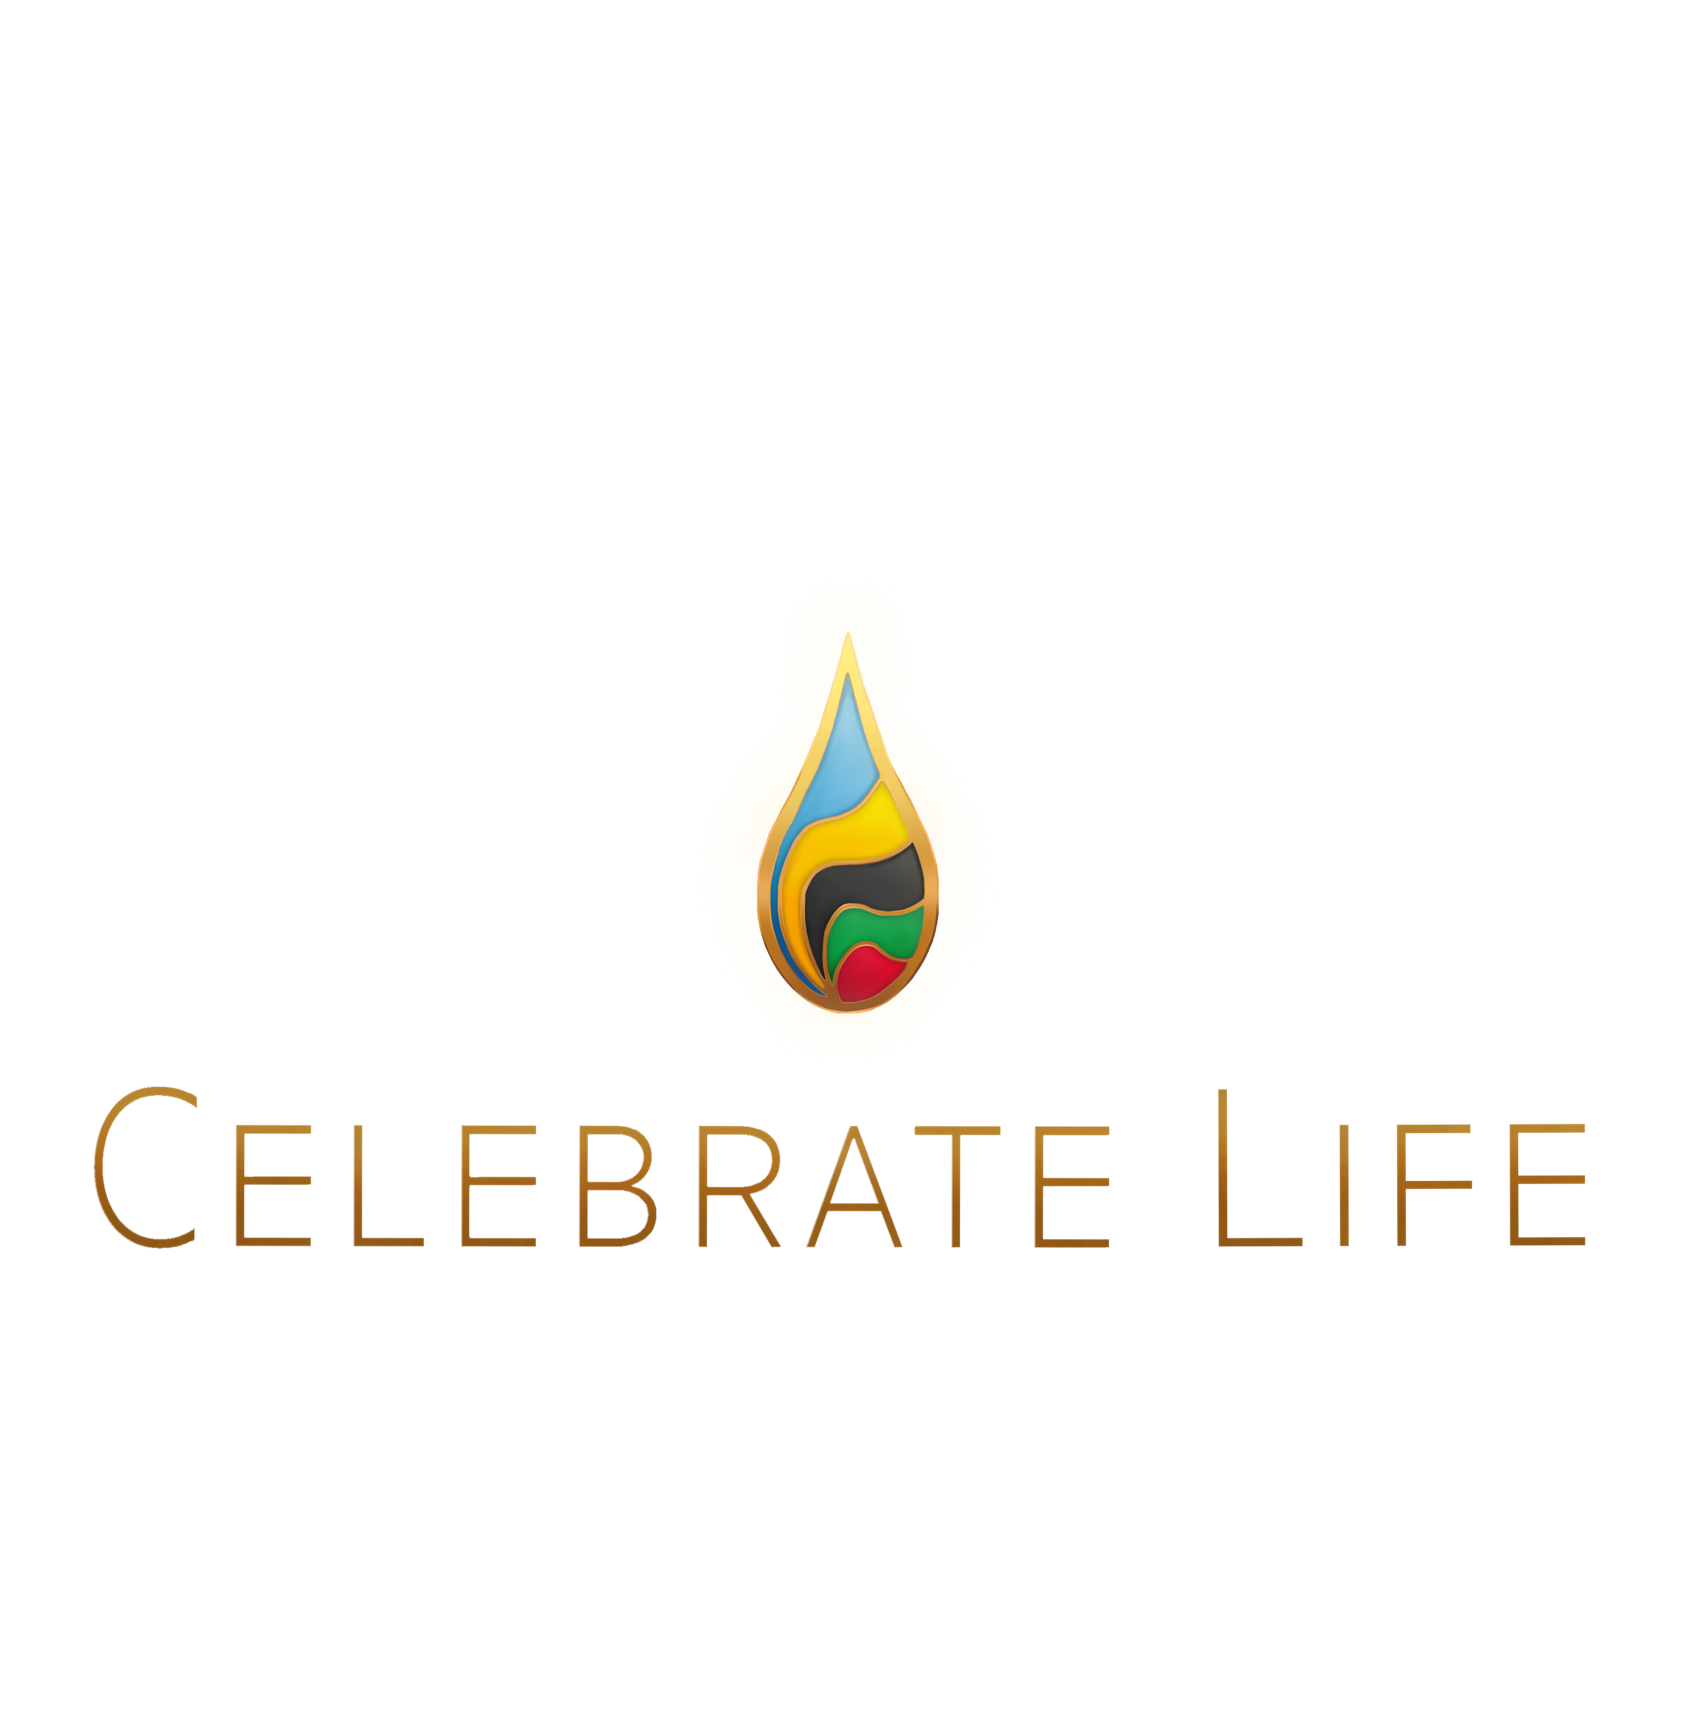  tshirt image coming soon-Celebrate Life logo